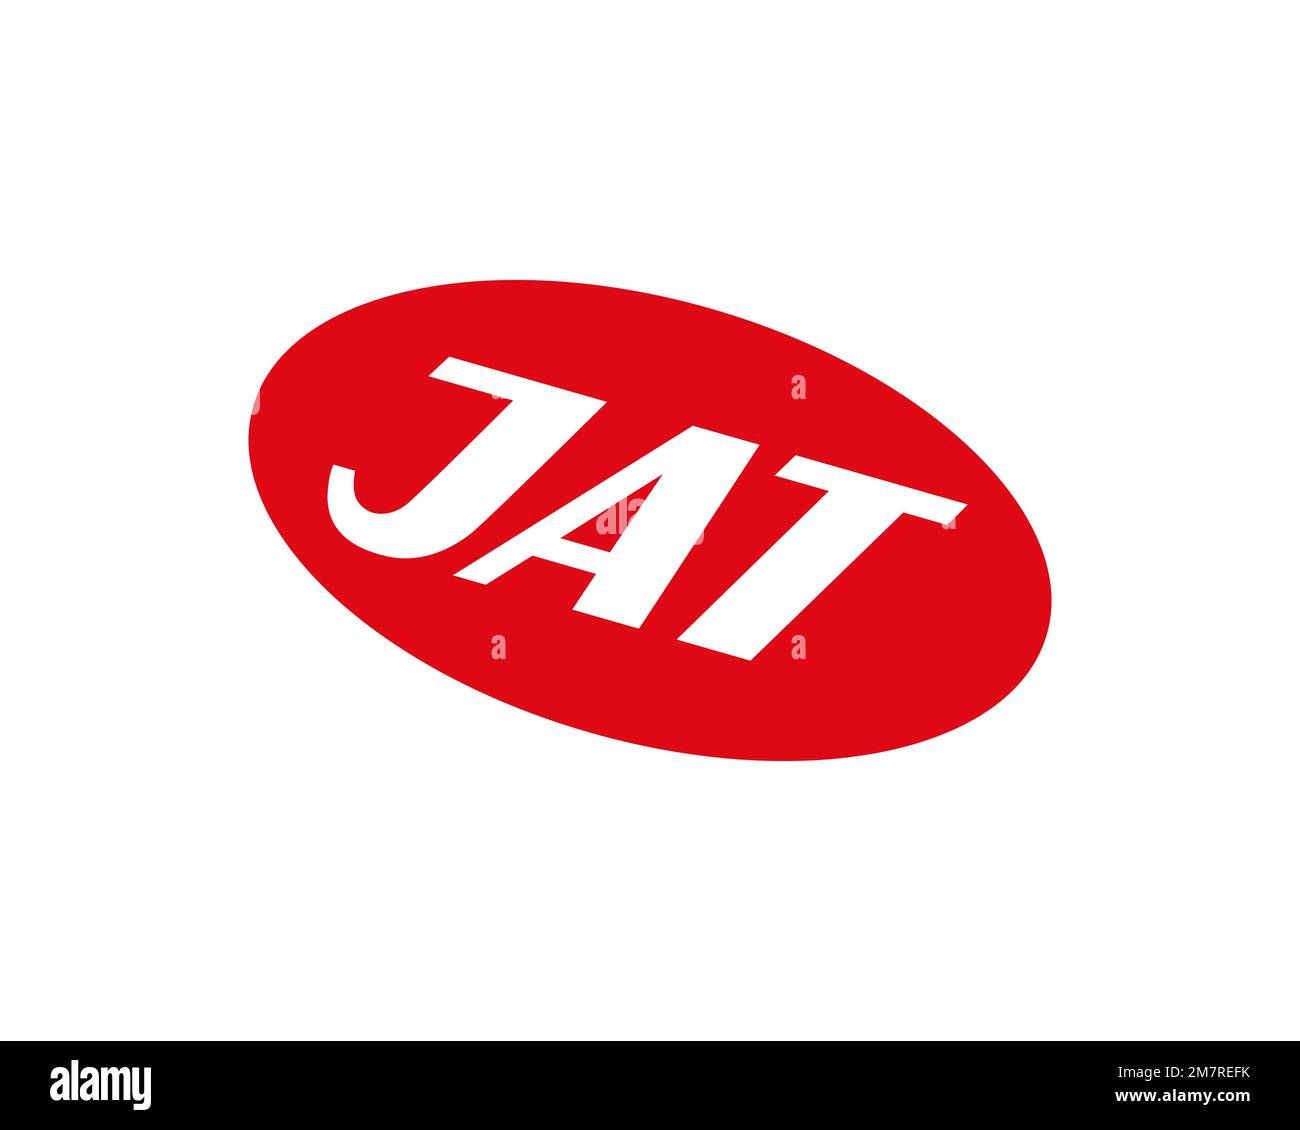 Jat Airways, logo ruotato, sfondo bianco B Foto Stock